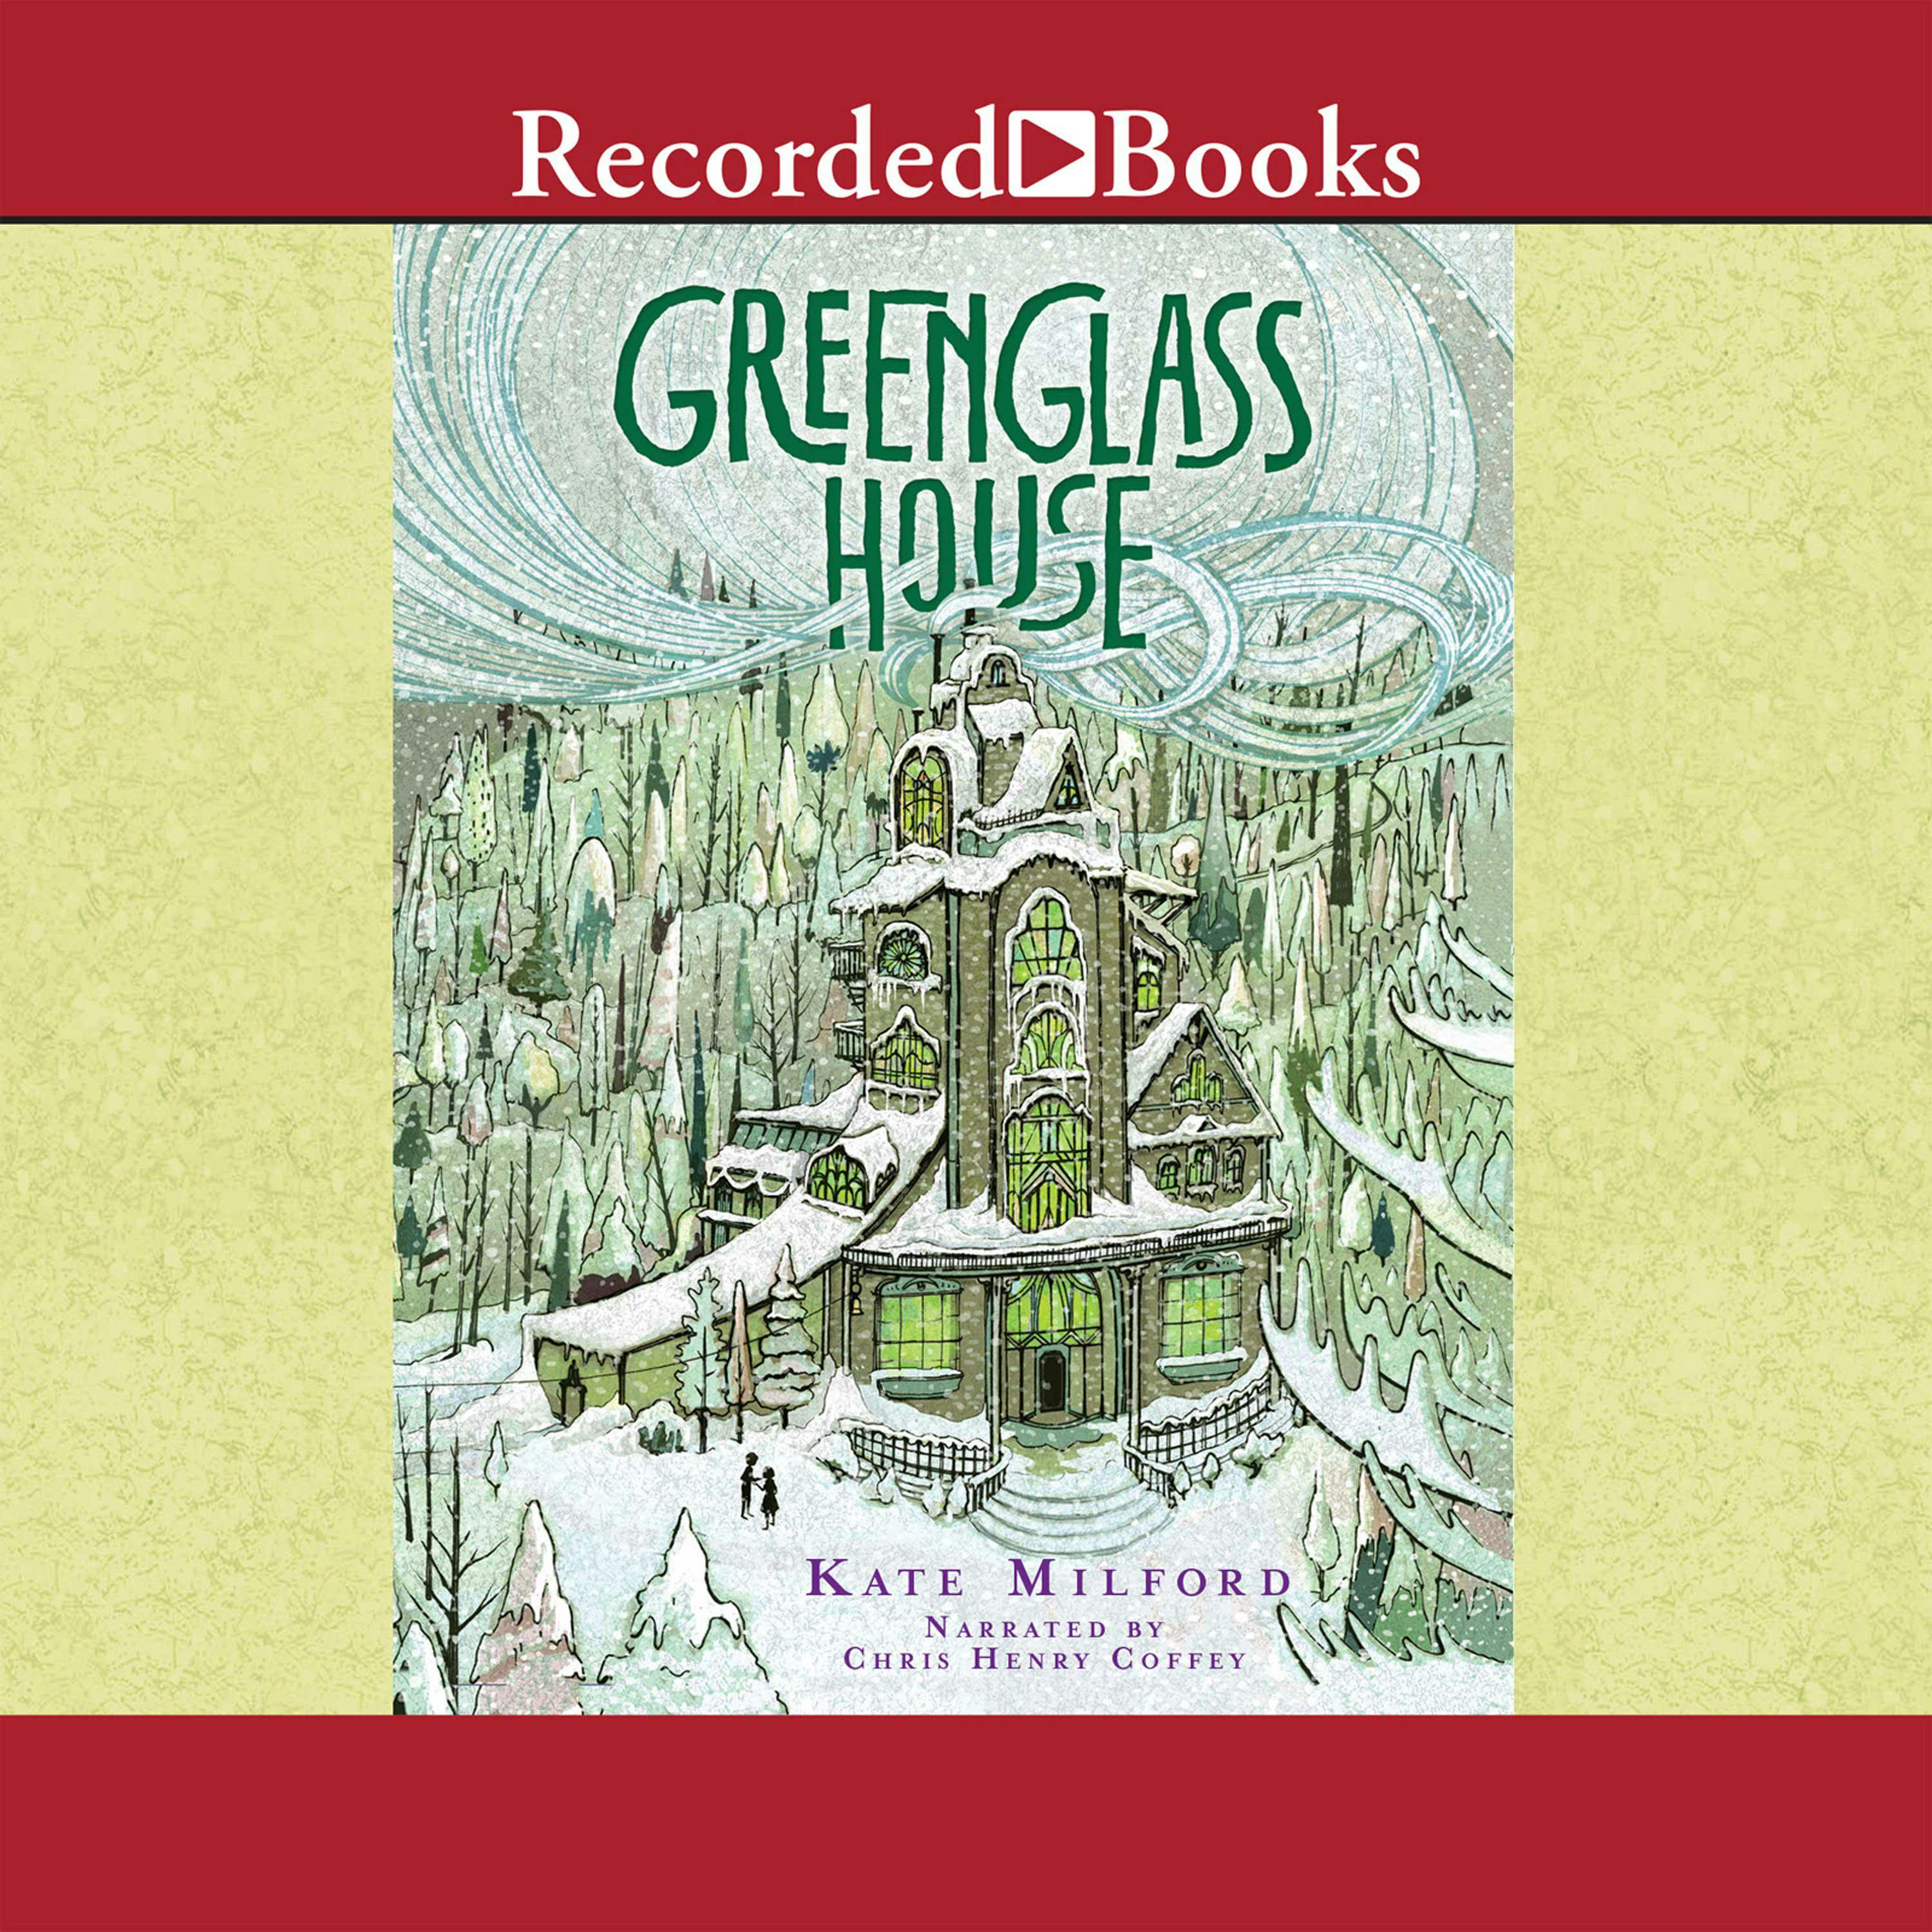 Greenglass House - Kate Milford